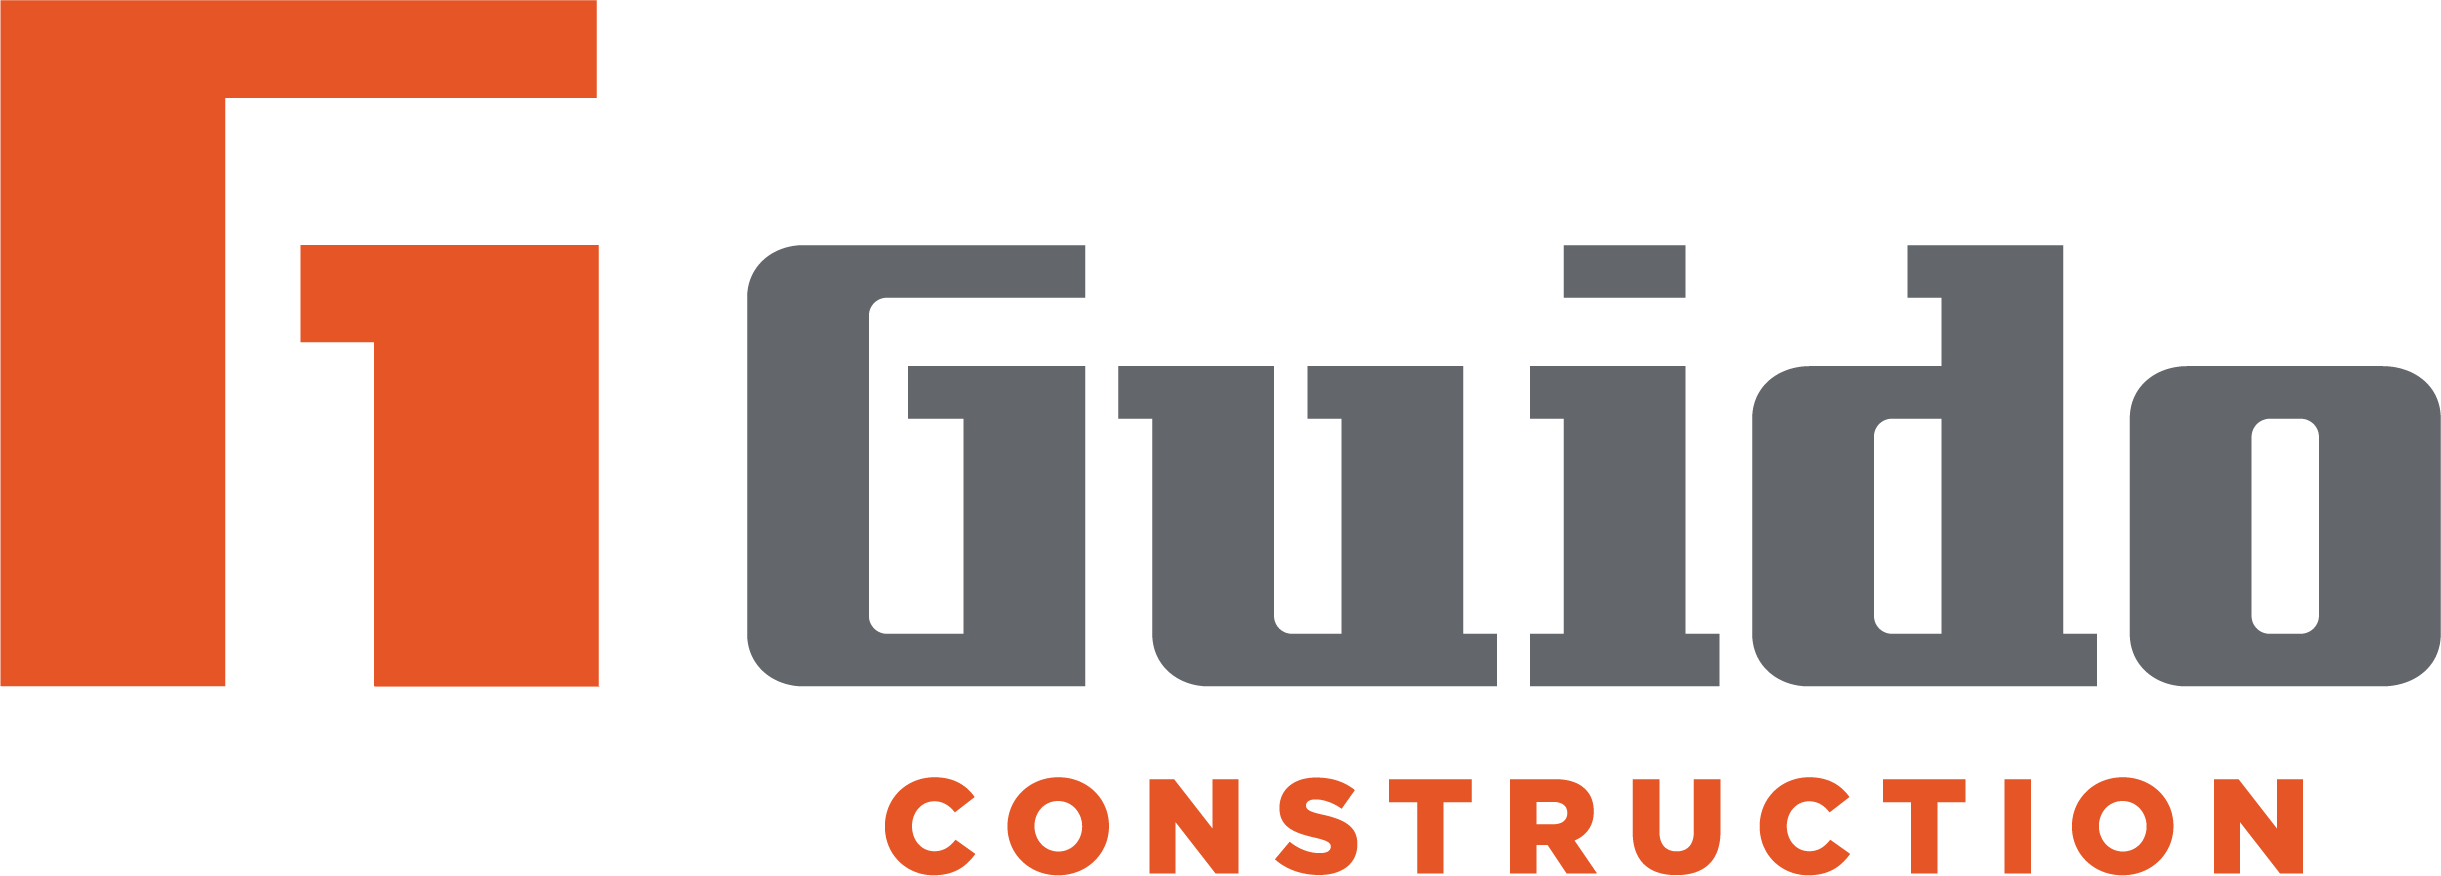 Guido Construction